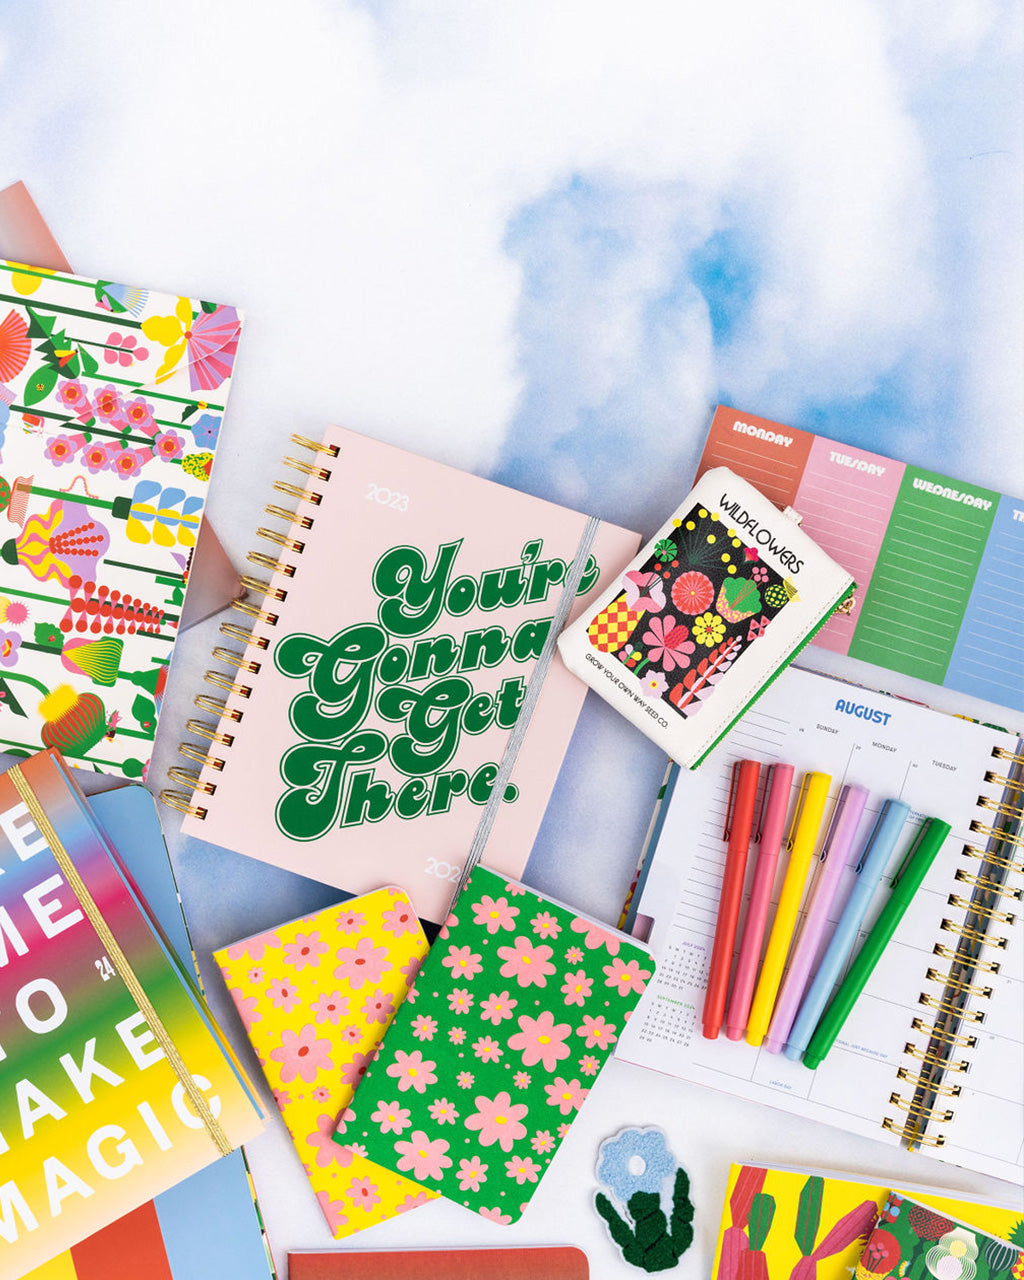 Pen+Gear Stationery Set, Daisy, Blank Diaries & Journals, Paper